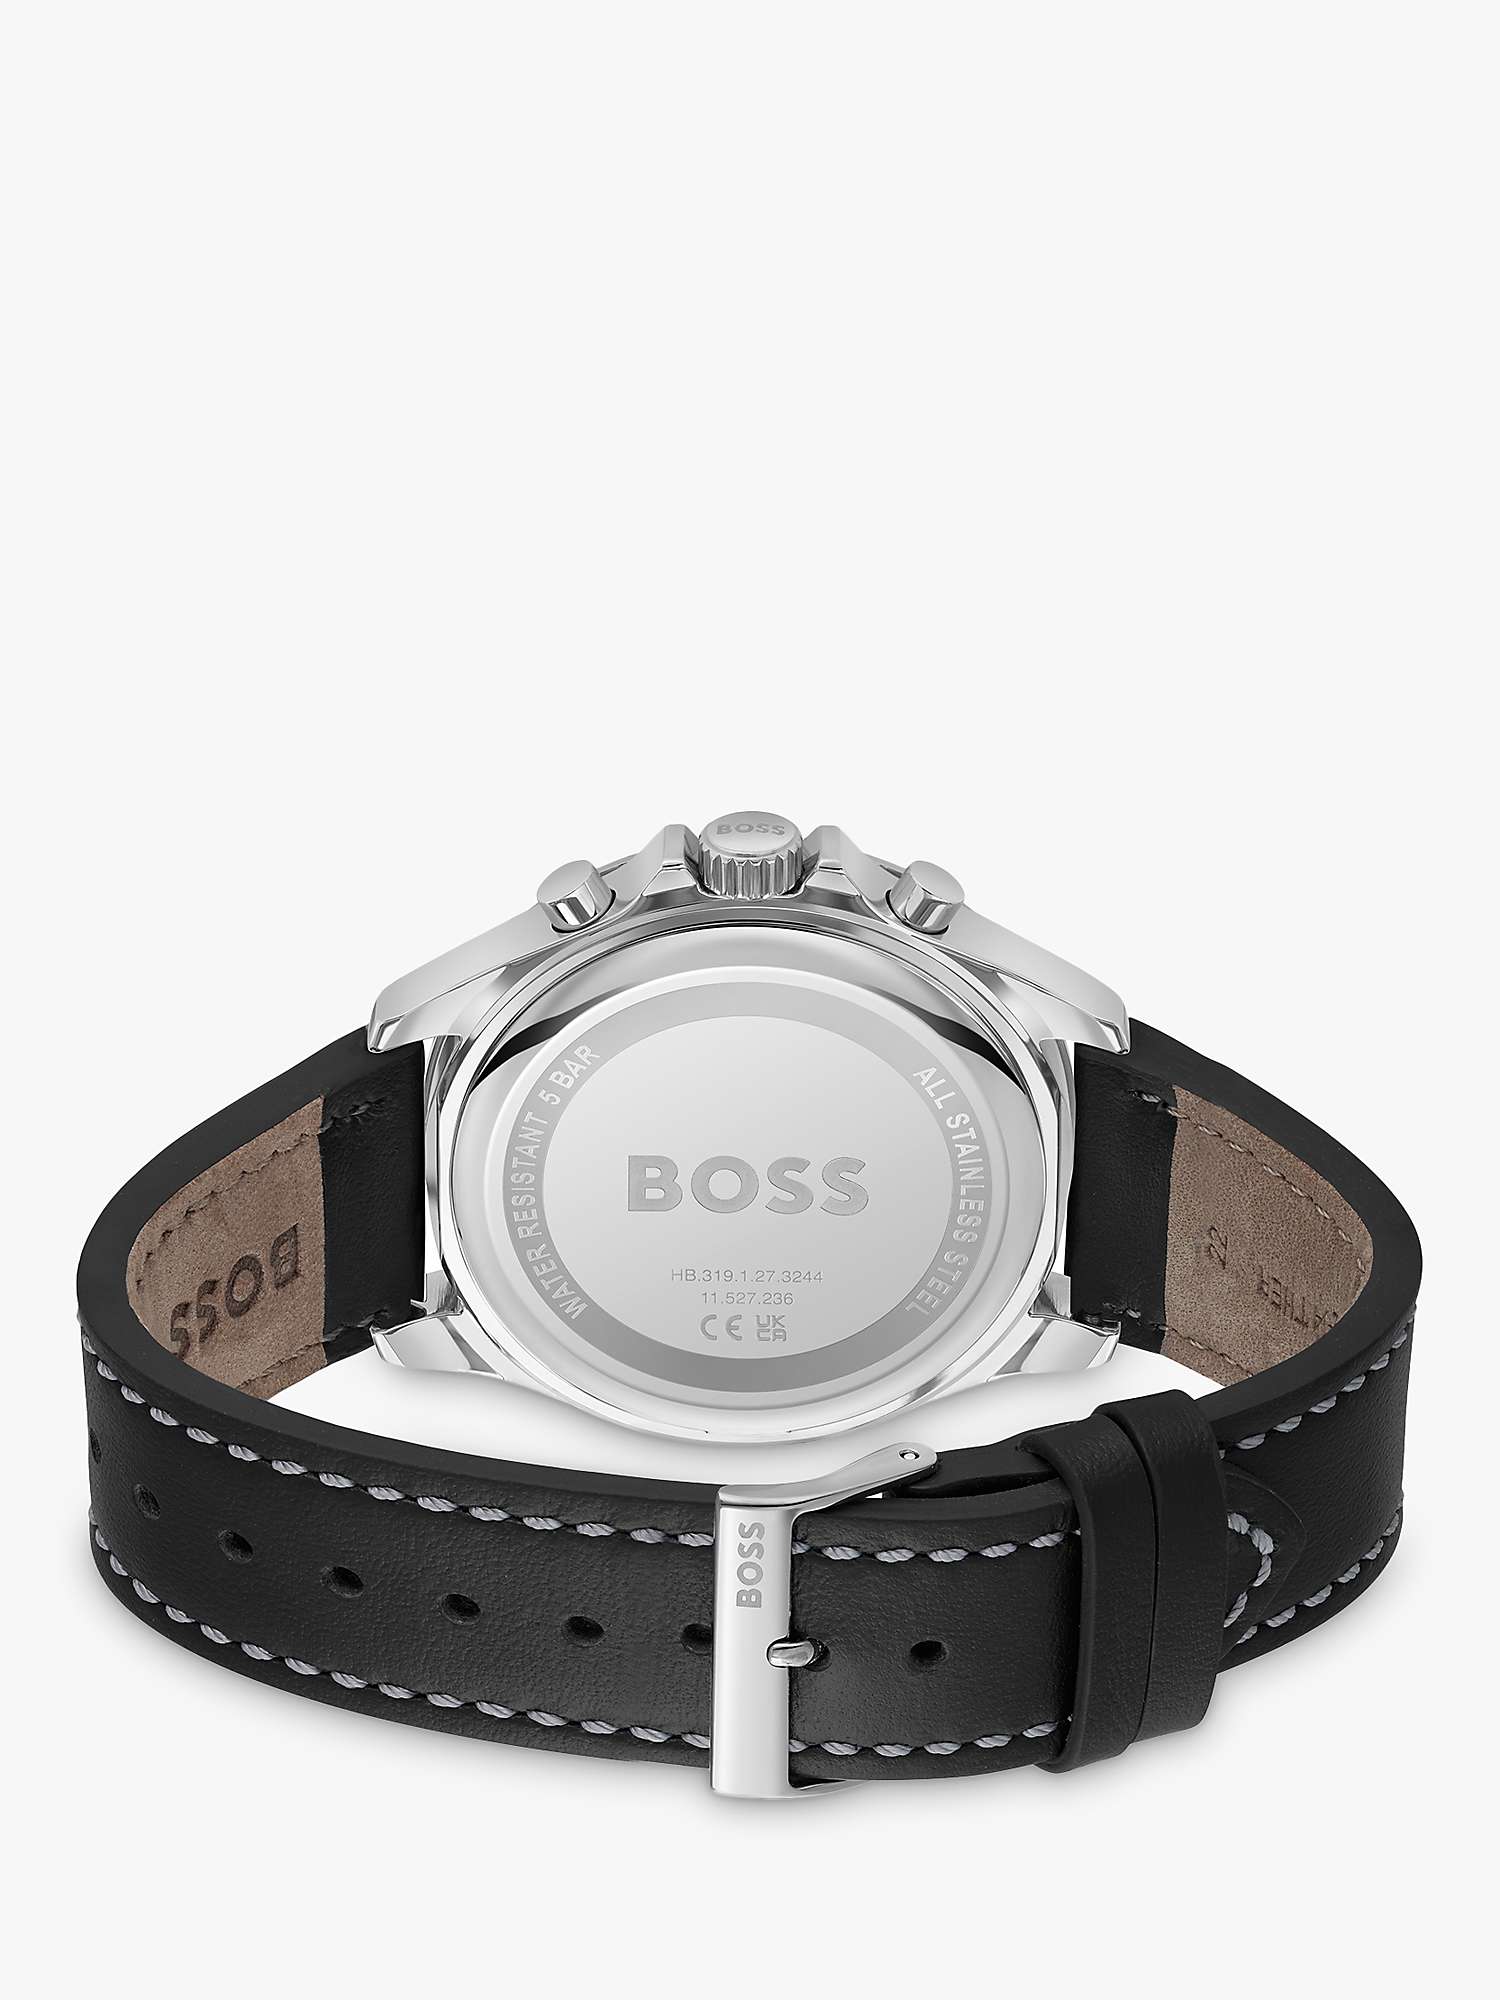 BOSS Men's Troper Chronograph Leather Strap Watch, Black 1514055 at John  Lewis & Partners